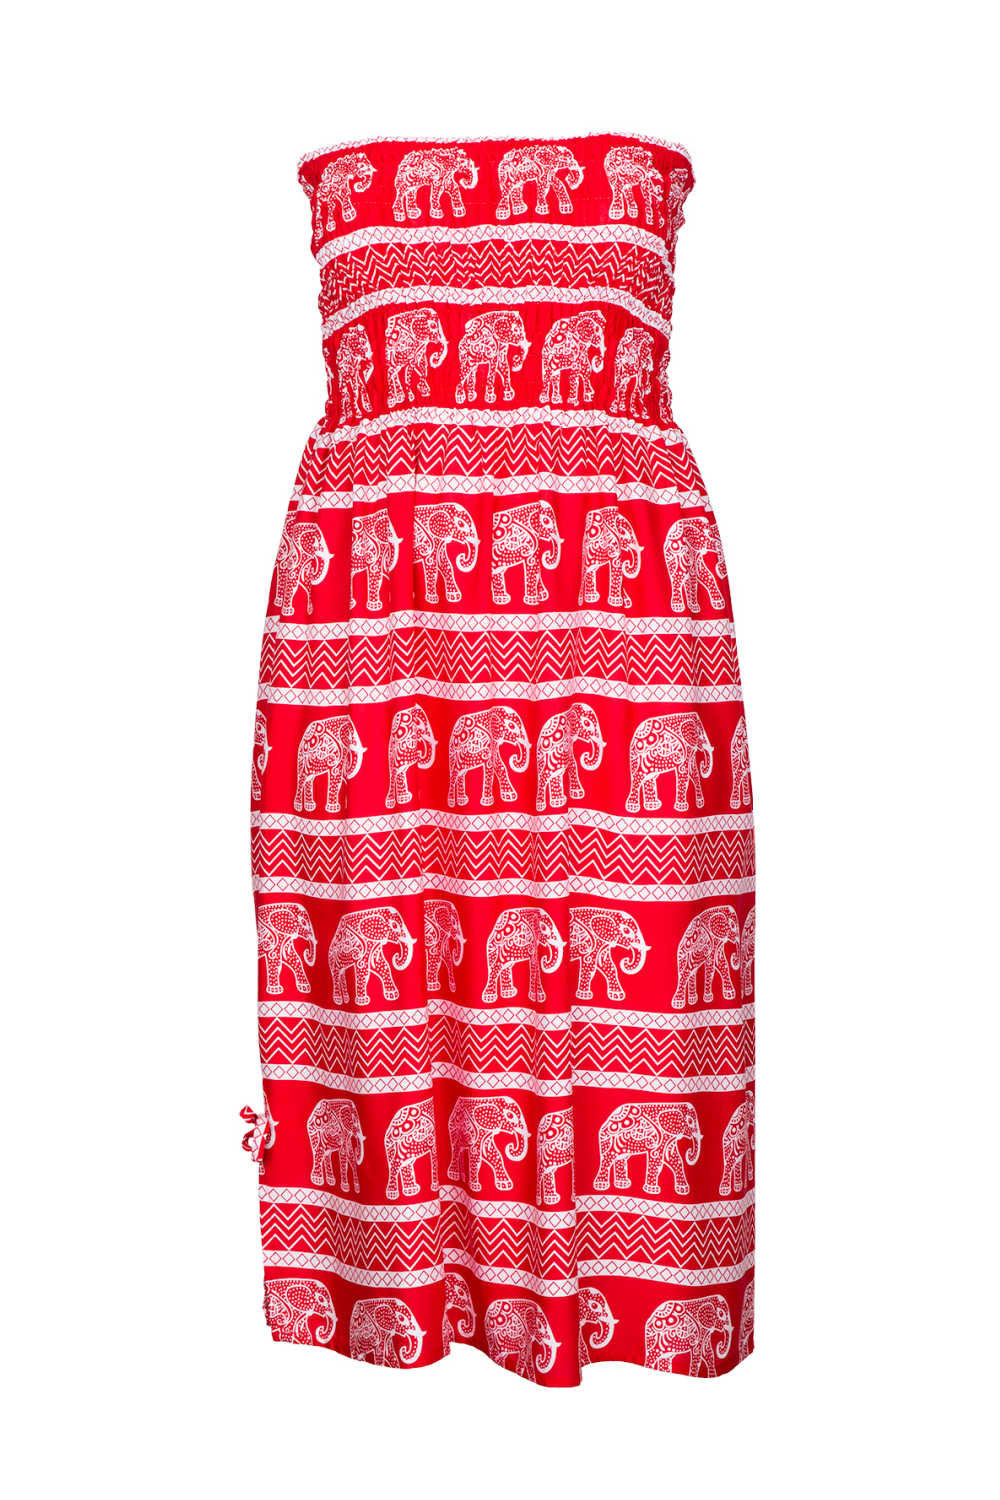 boob-tube-dress-red-white-elephant-print